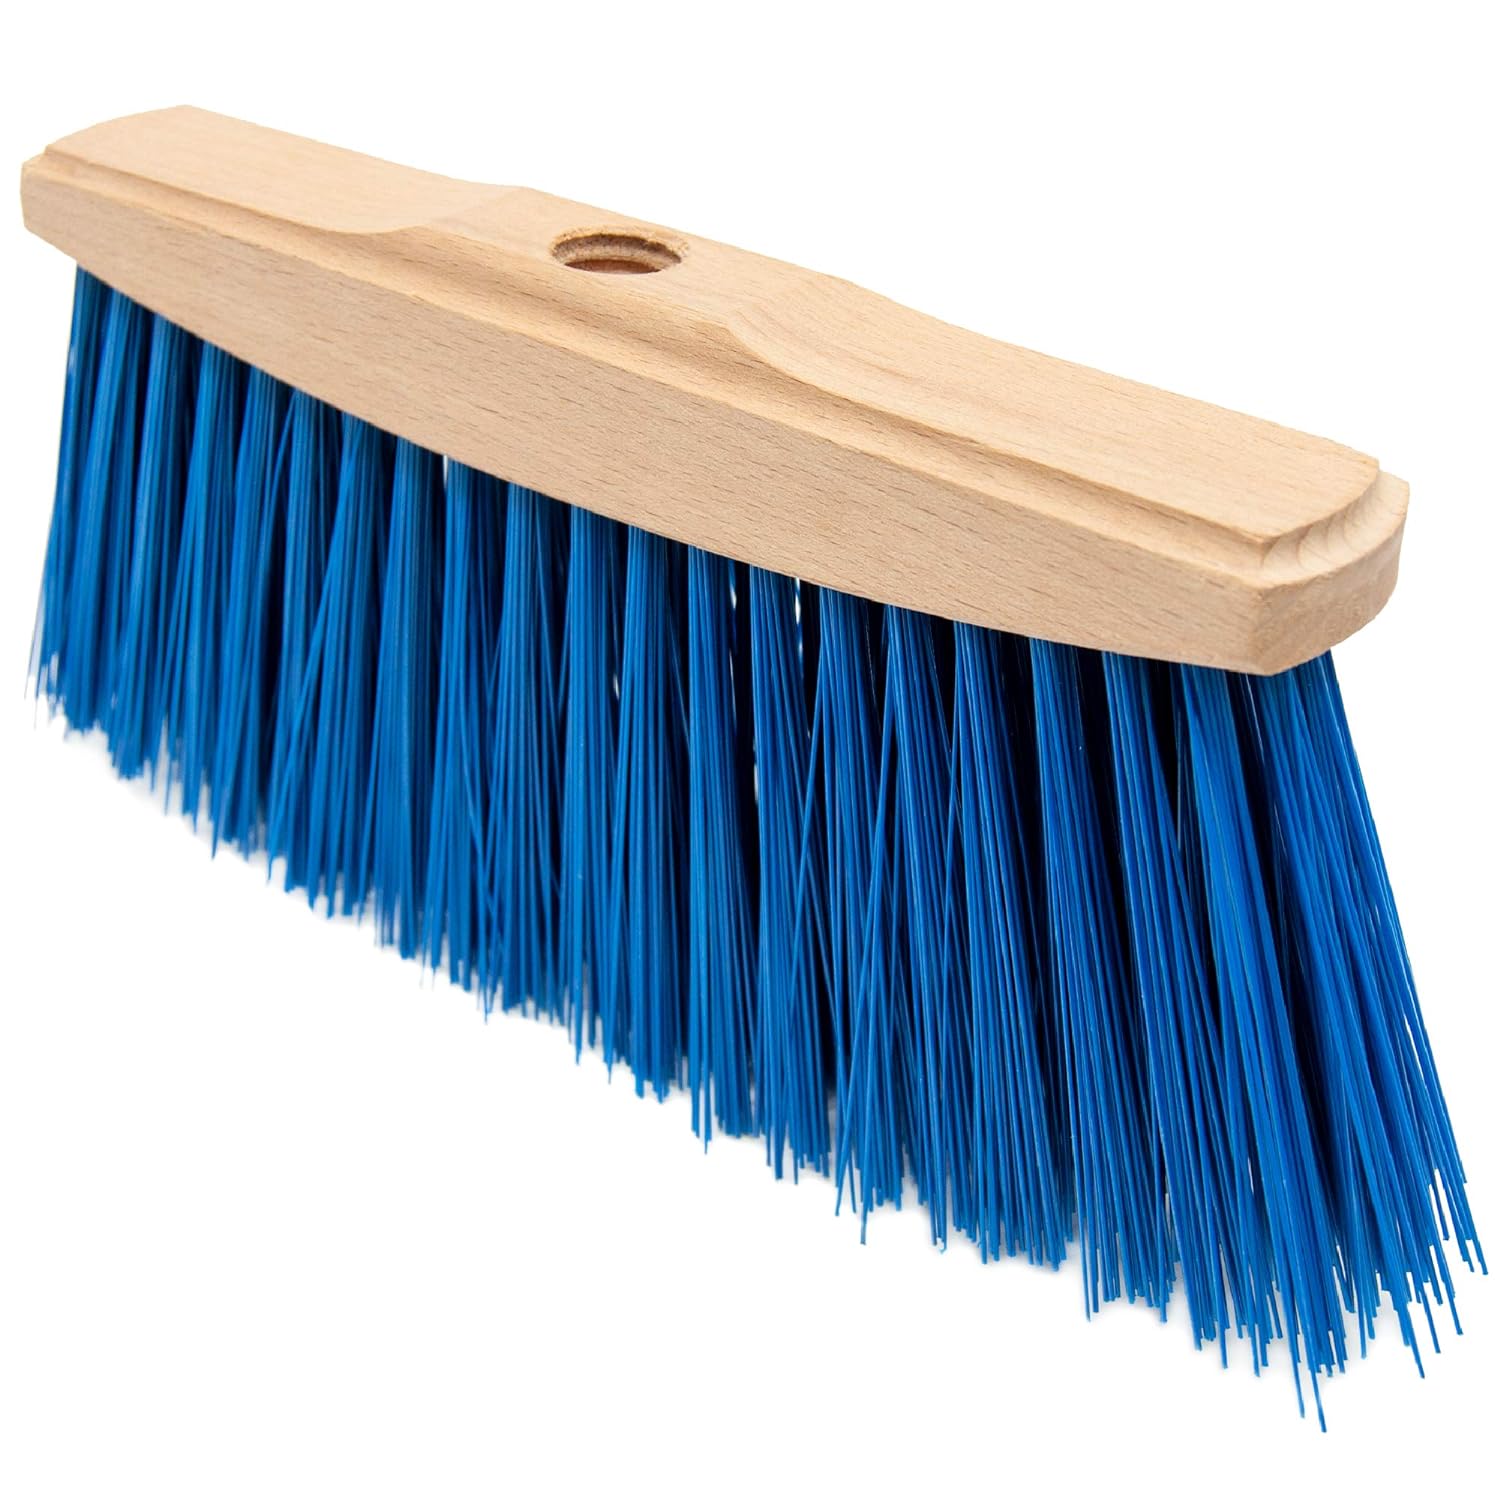 Garden Broom, Sweeping Brush Head 9.85" - Perfect For Outdoor Broom or Yard Brush, Stiff Bristle Garden Brush